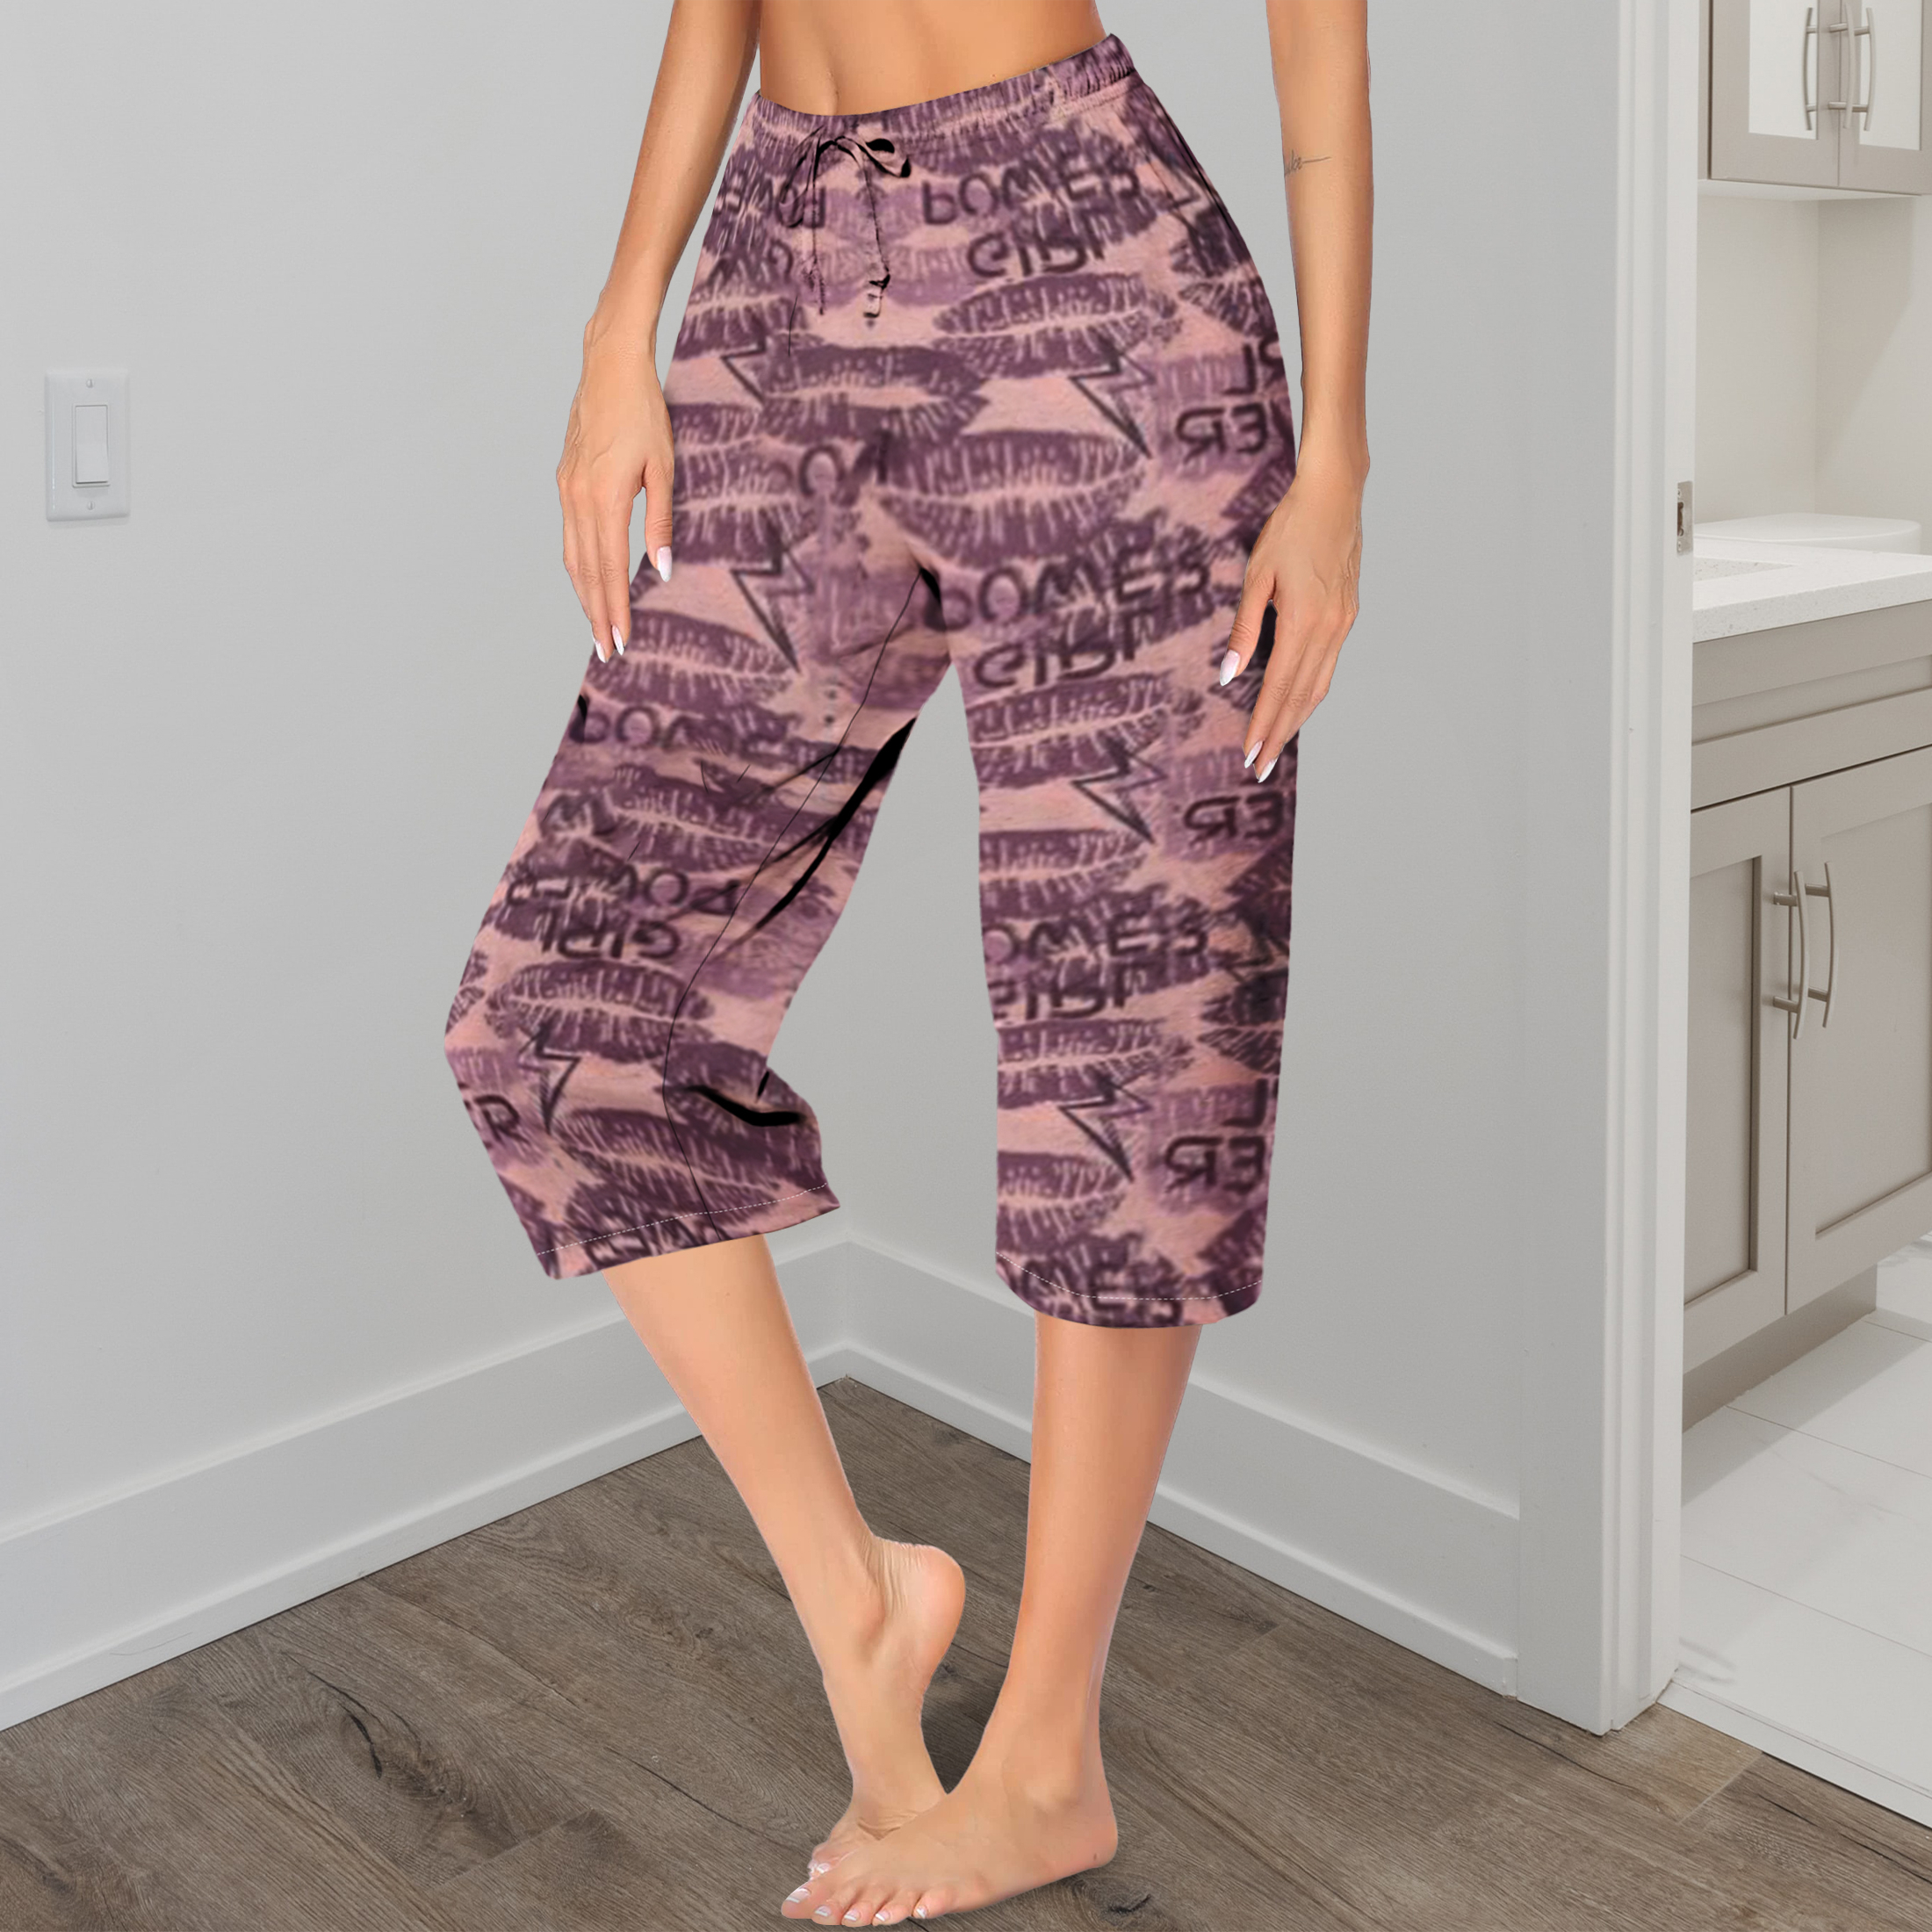 5-Pack Women's Capri Pajama Pants Soft Comfy Printed Summer Sleepwear Ladies PJ Bottom With Drawstring - XL